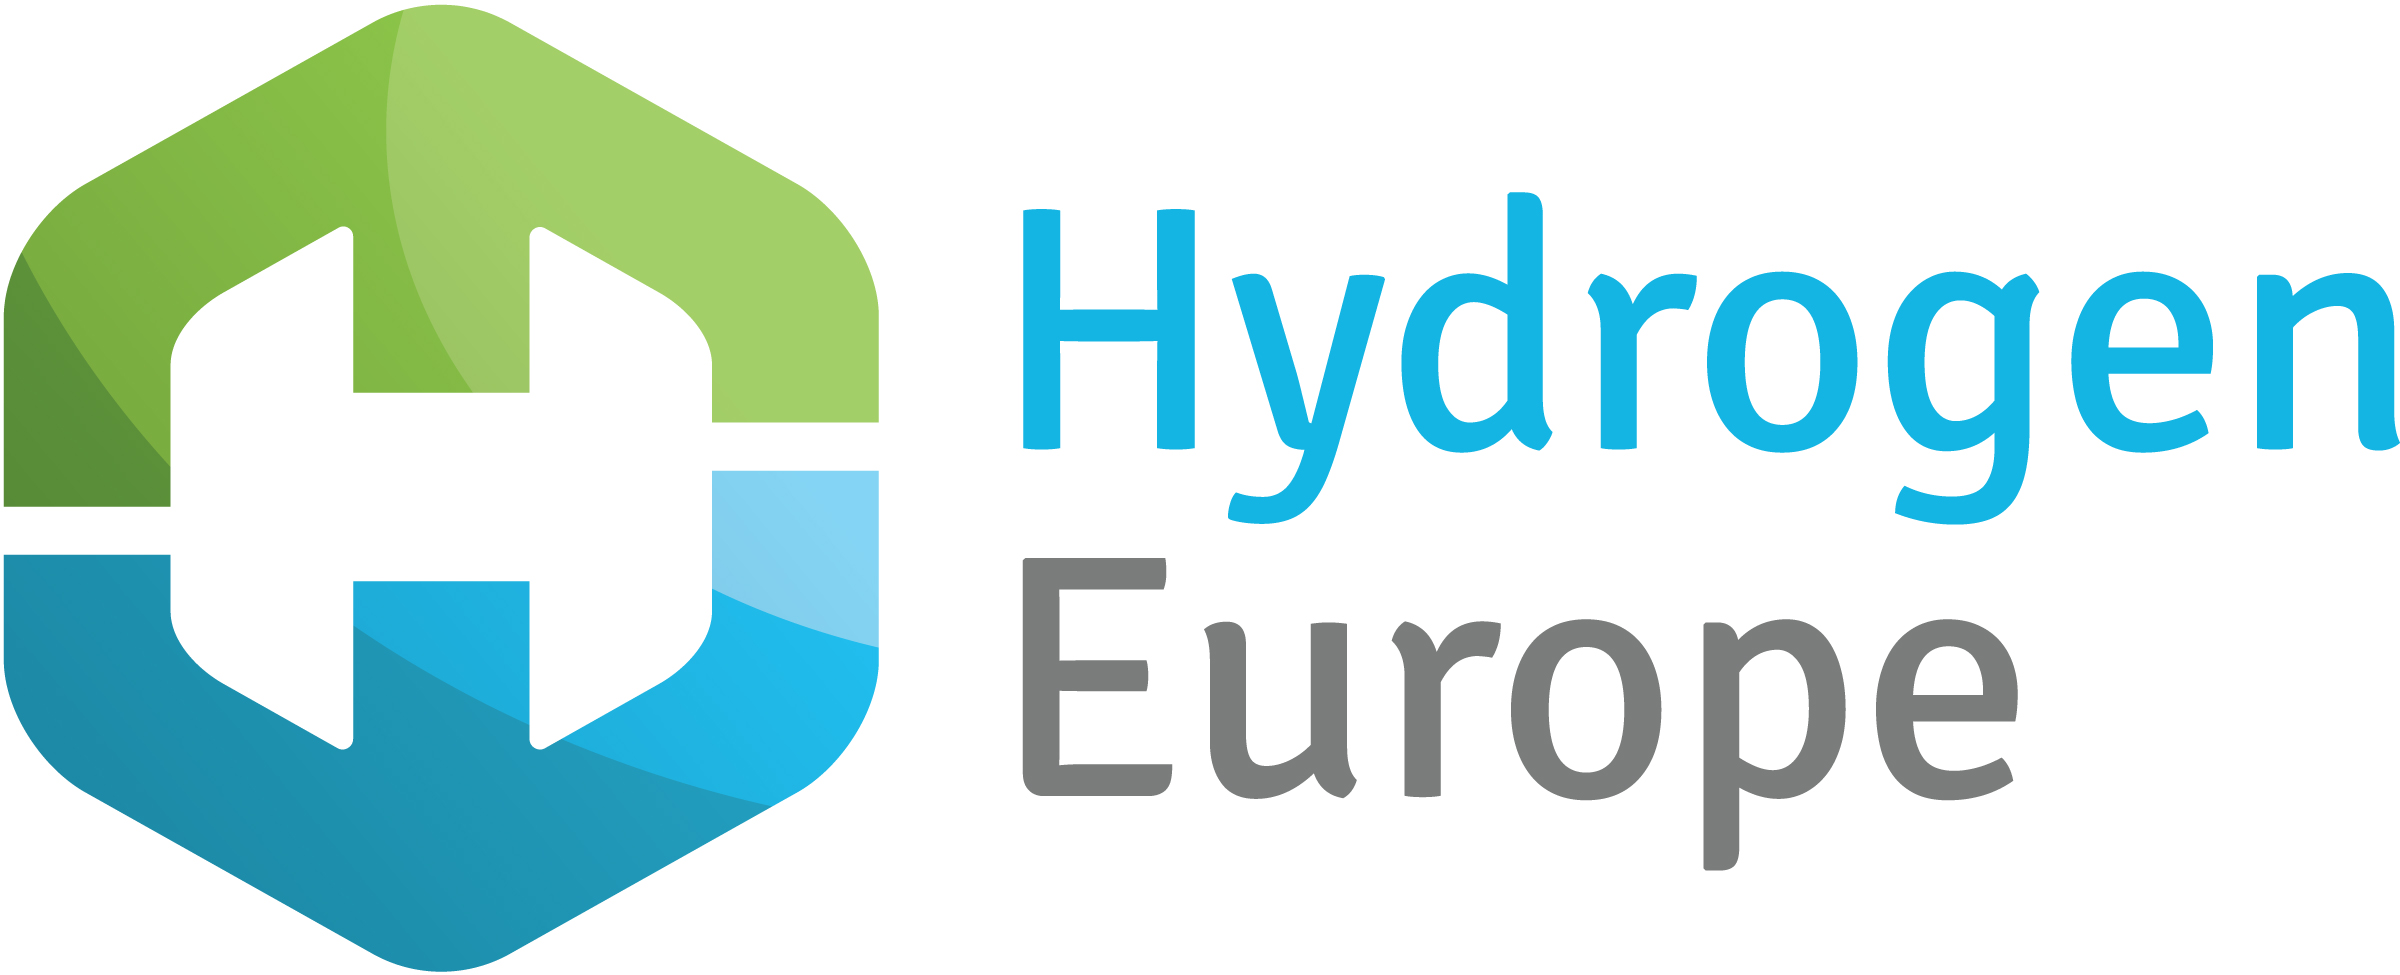 Hydrogen Europe: Στήριξη στην ευρωπαϊκή στρατηγική για τις υπεράκτιες ΑΠΕ- κεντρικός ο ρόλος του υδρογόνου